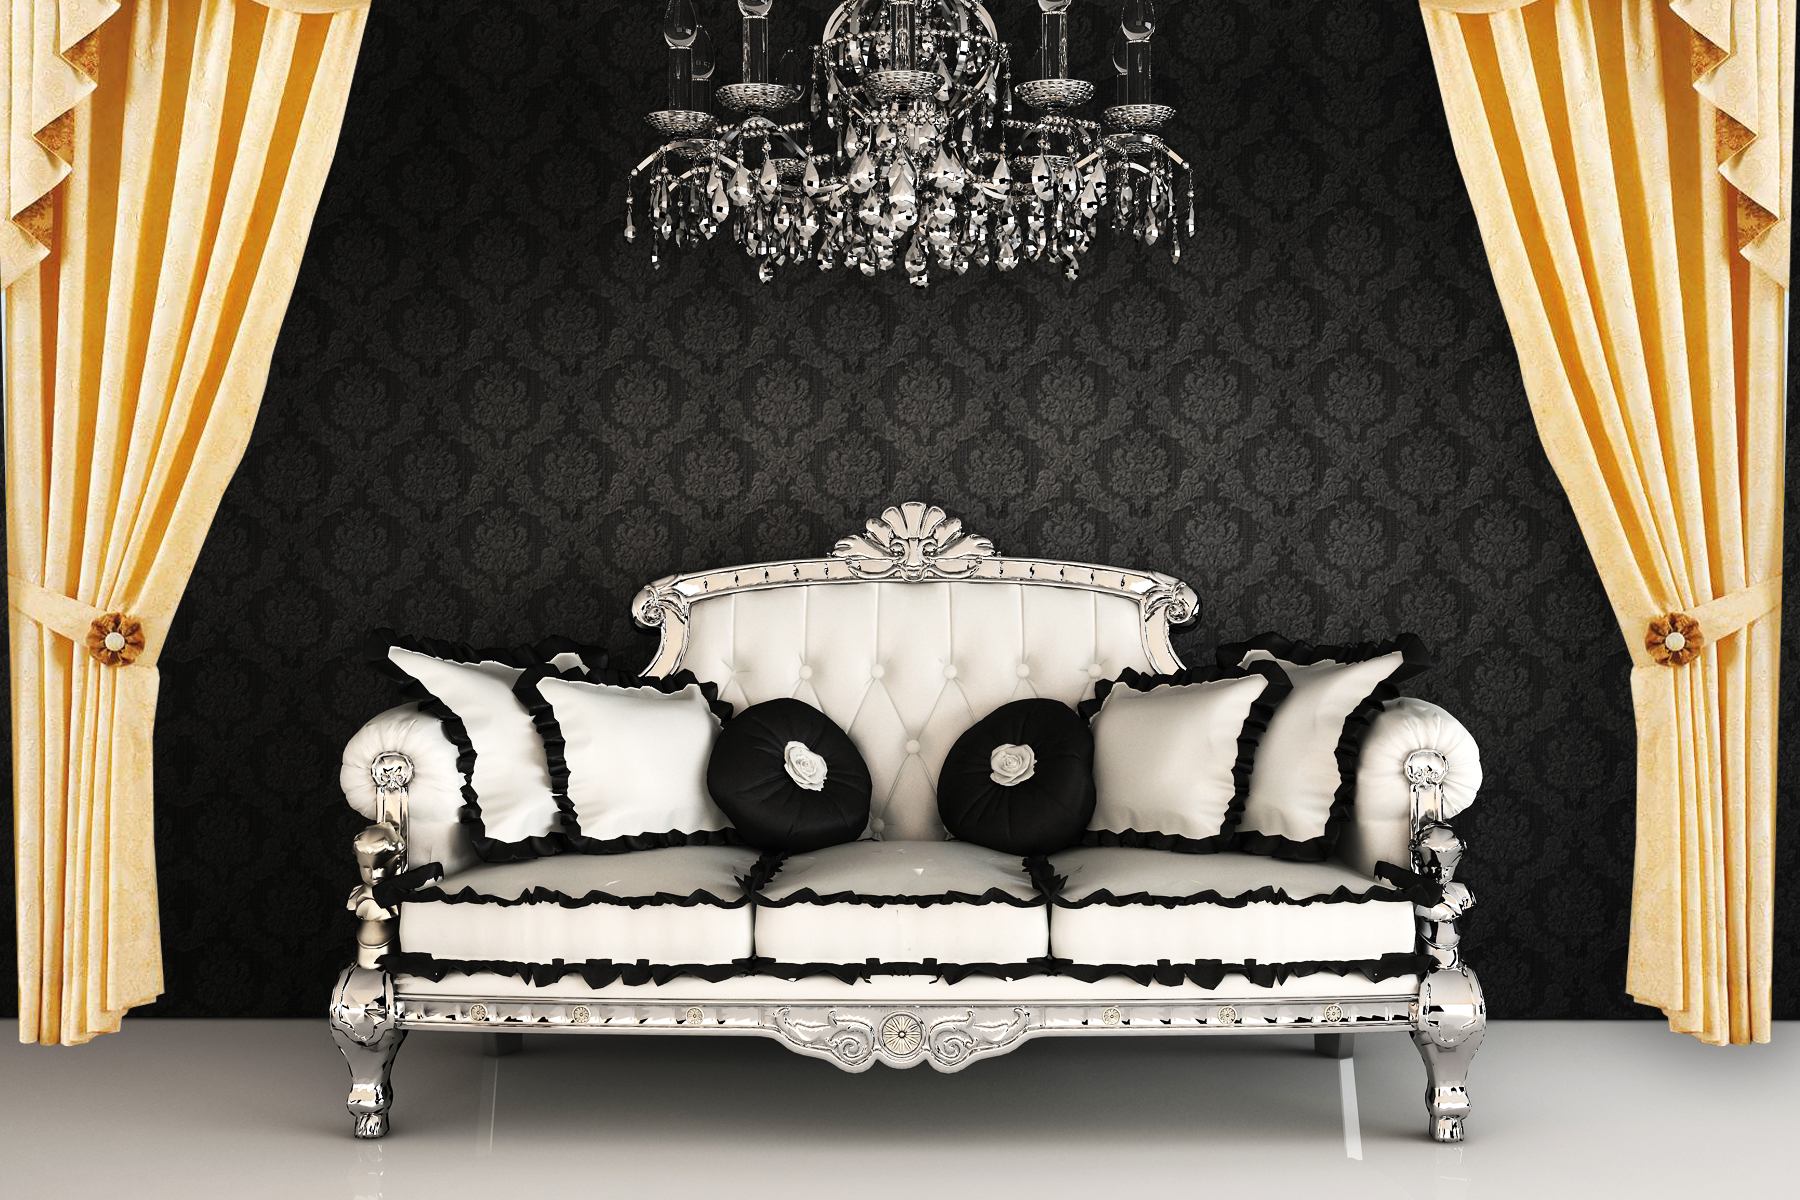 Royal-Sofa-With-Pillows BG.jpg